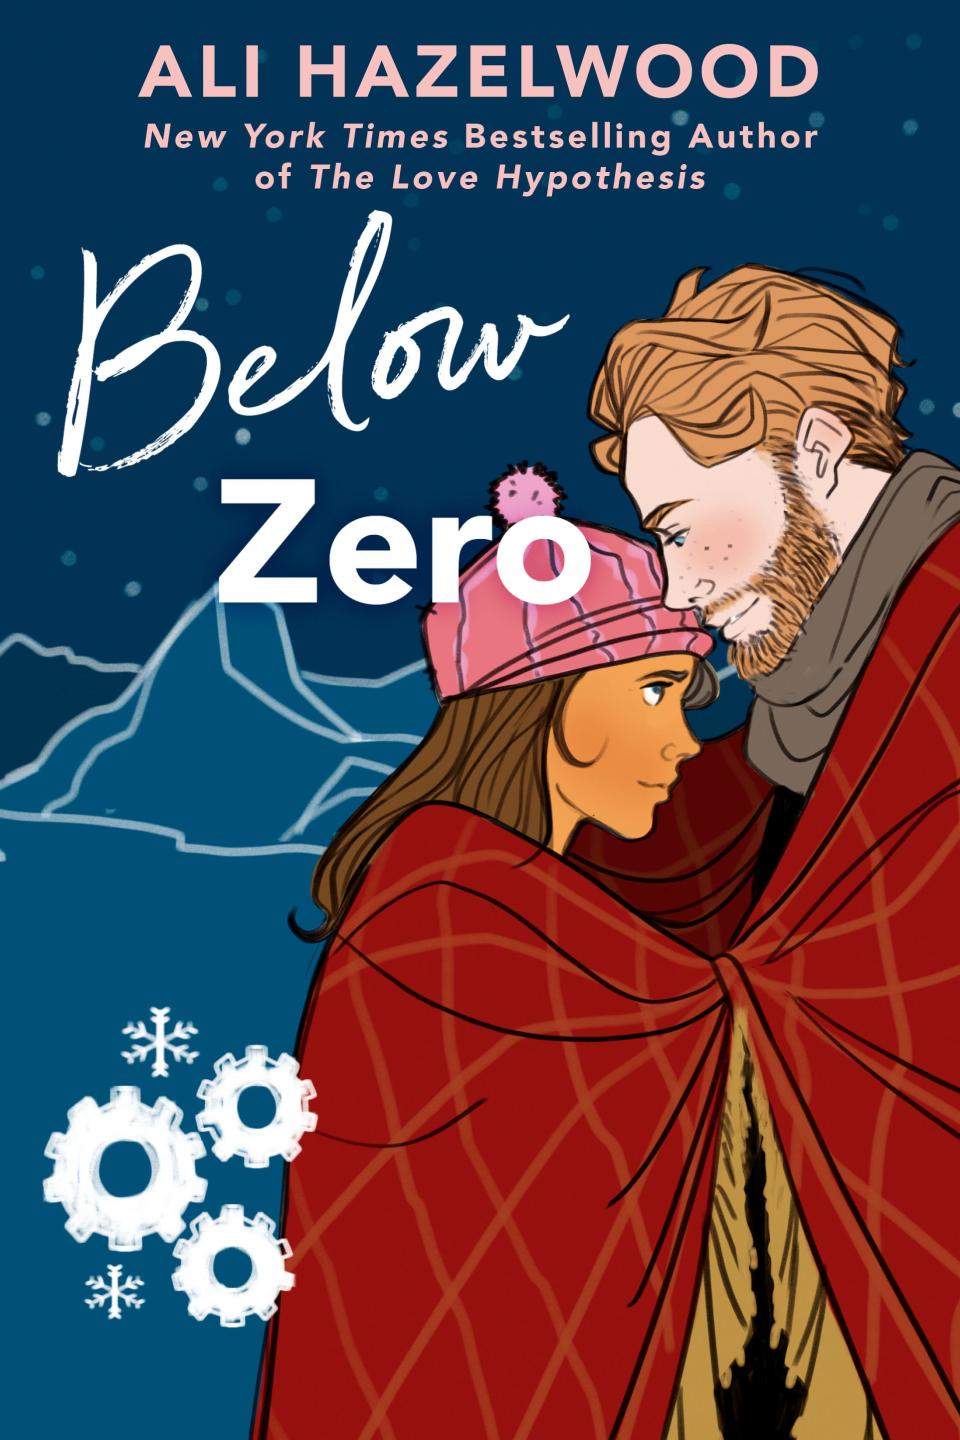 "Below Zero," by Ali Hazelwood